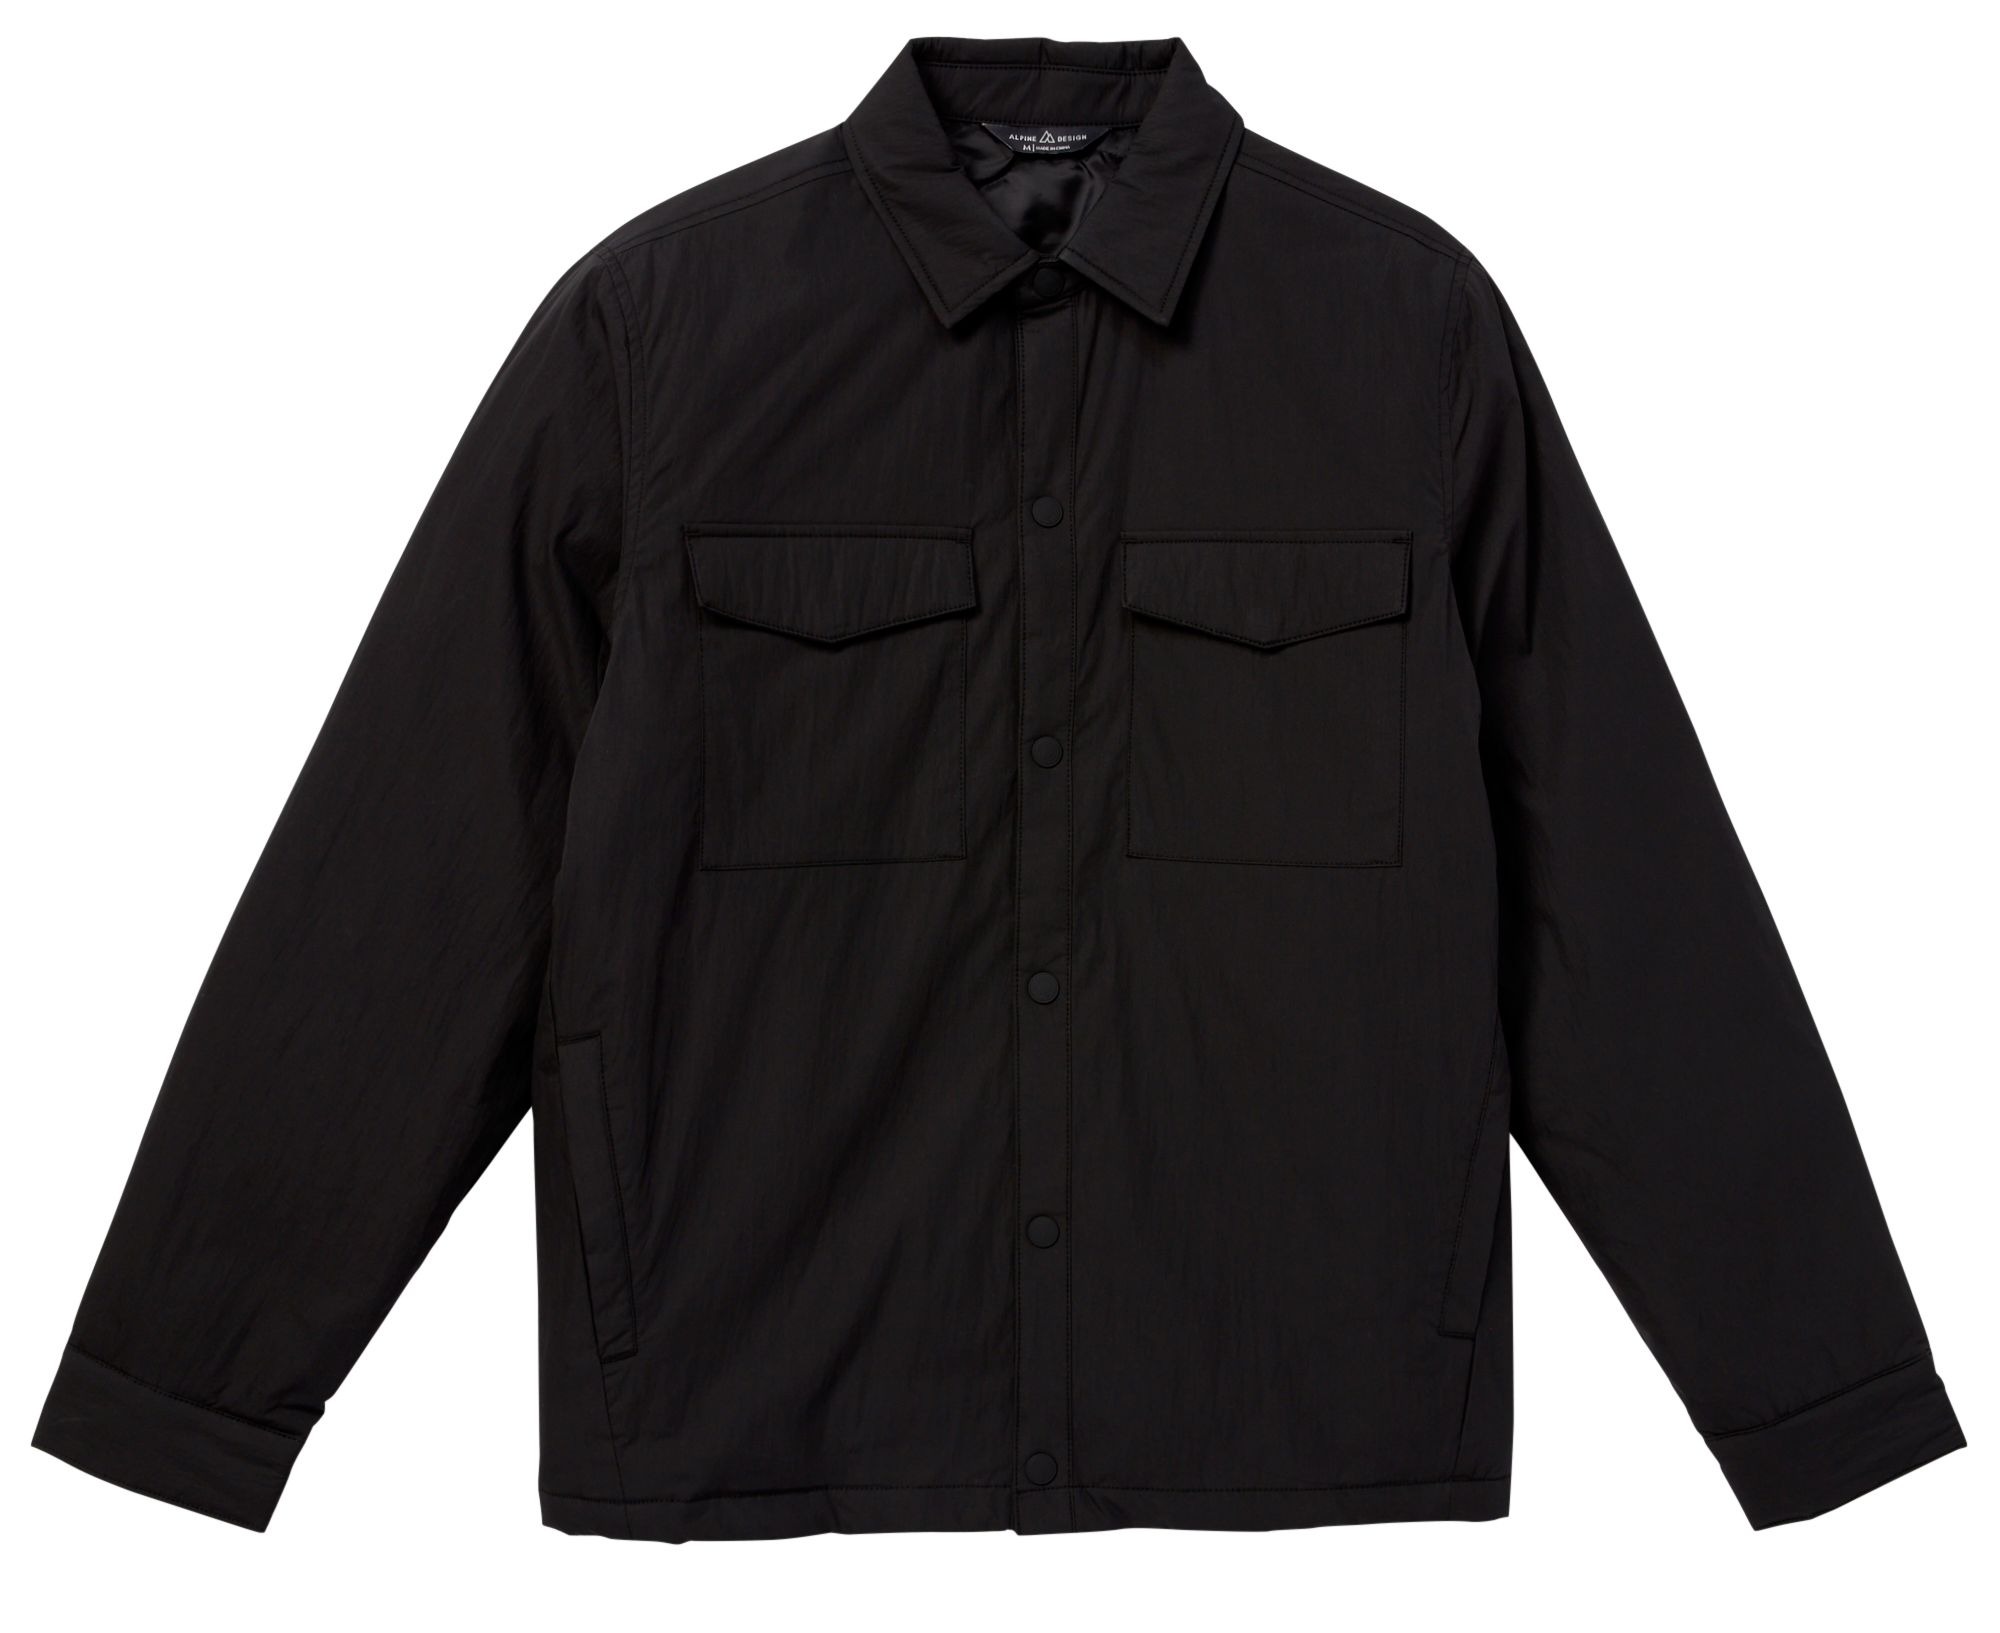 Alpine Design Men's Hilltop View Shirt Jacket | Dick's Sporting Goods